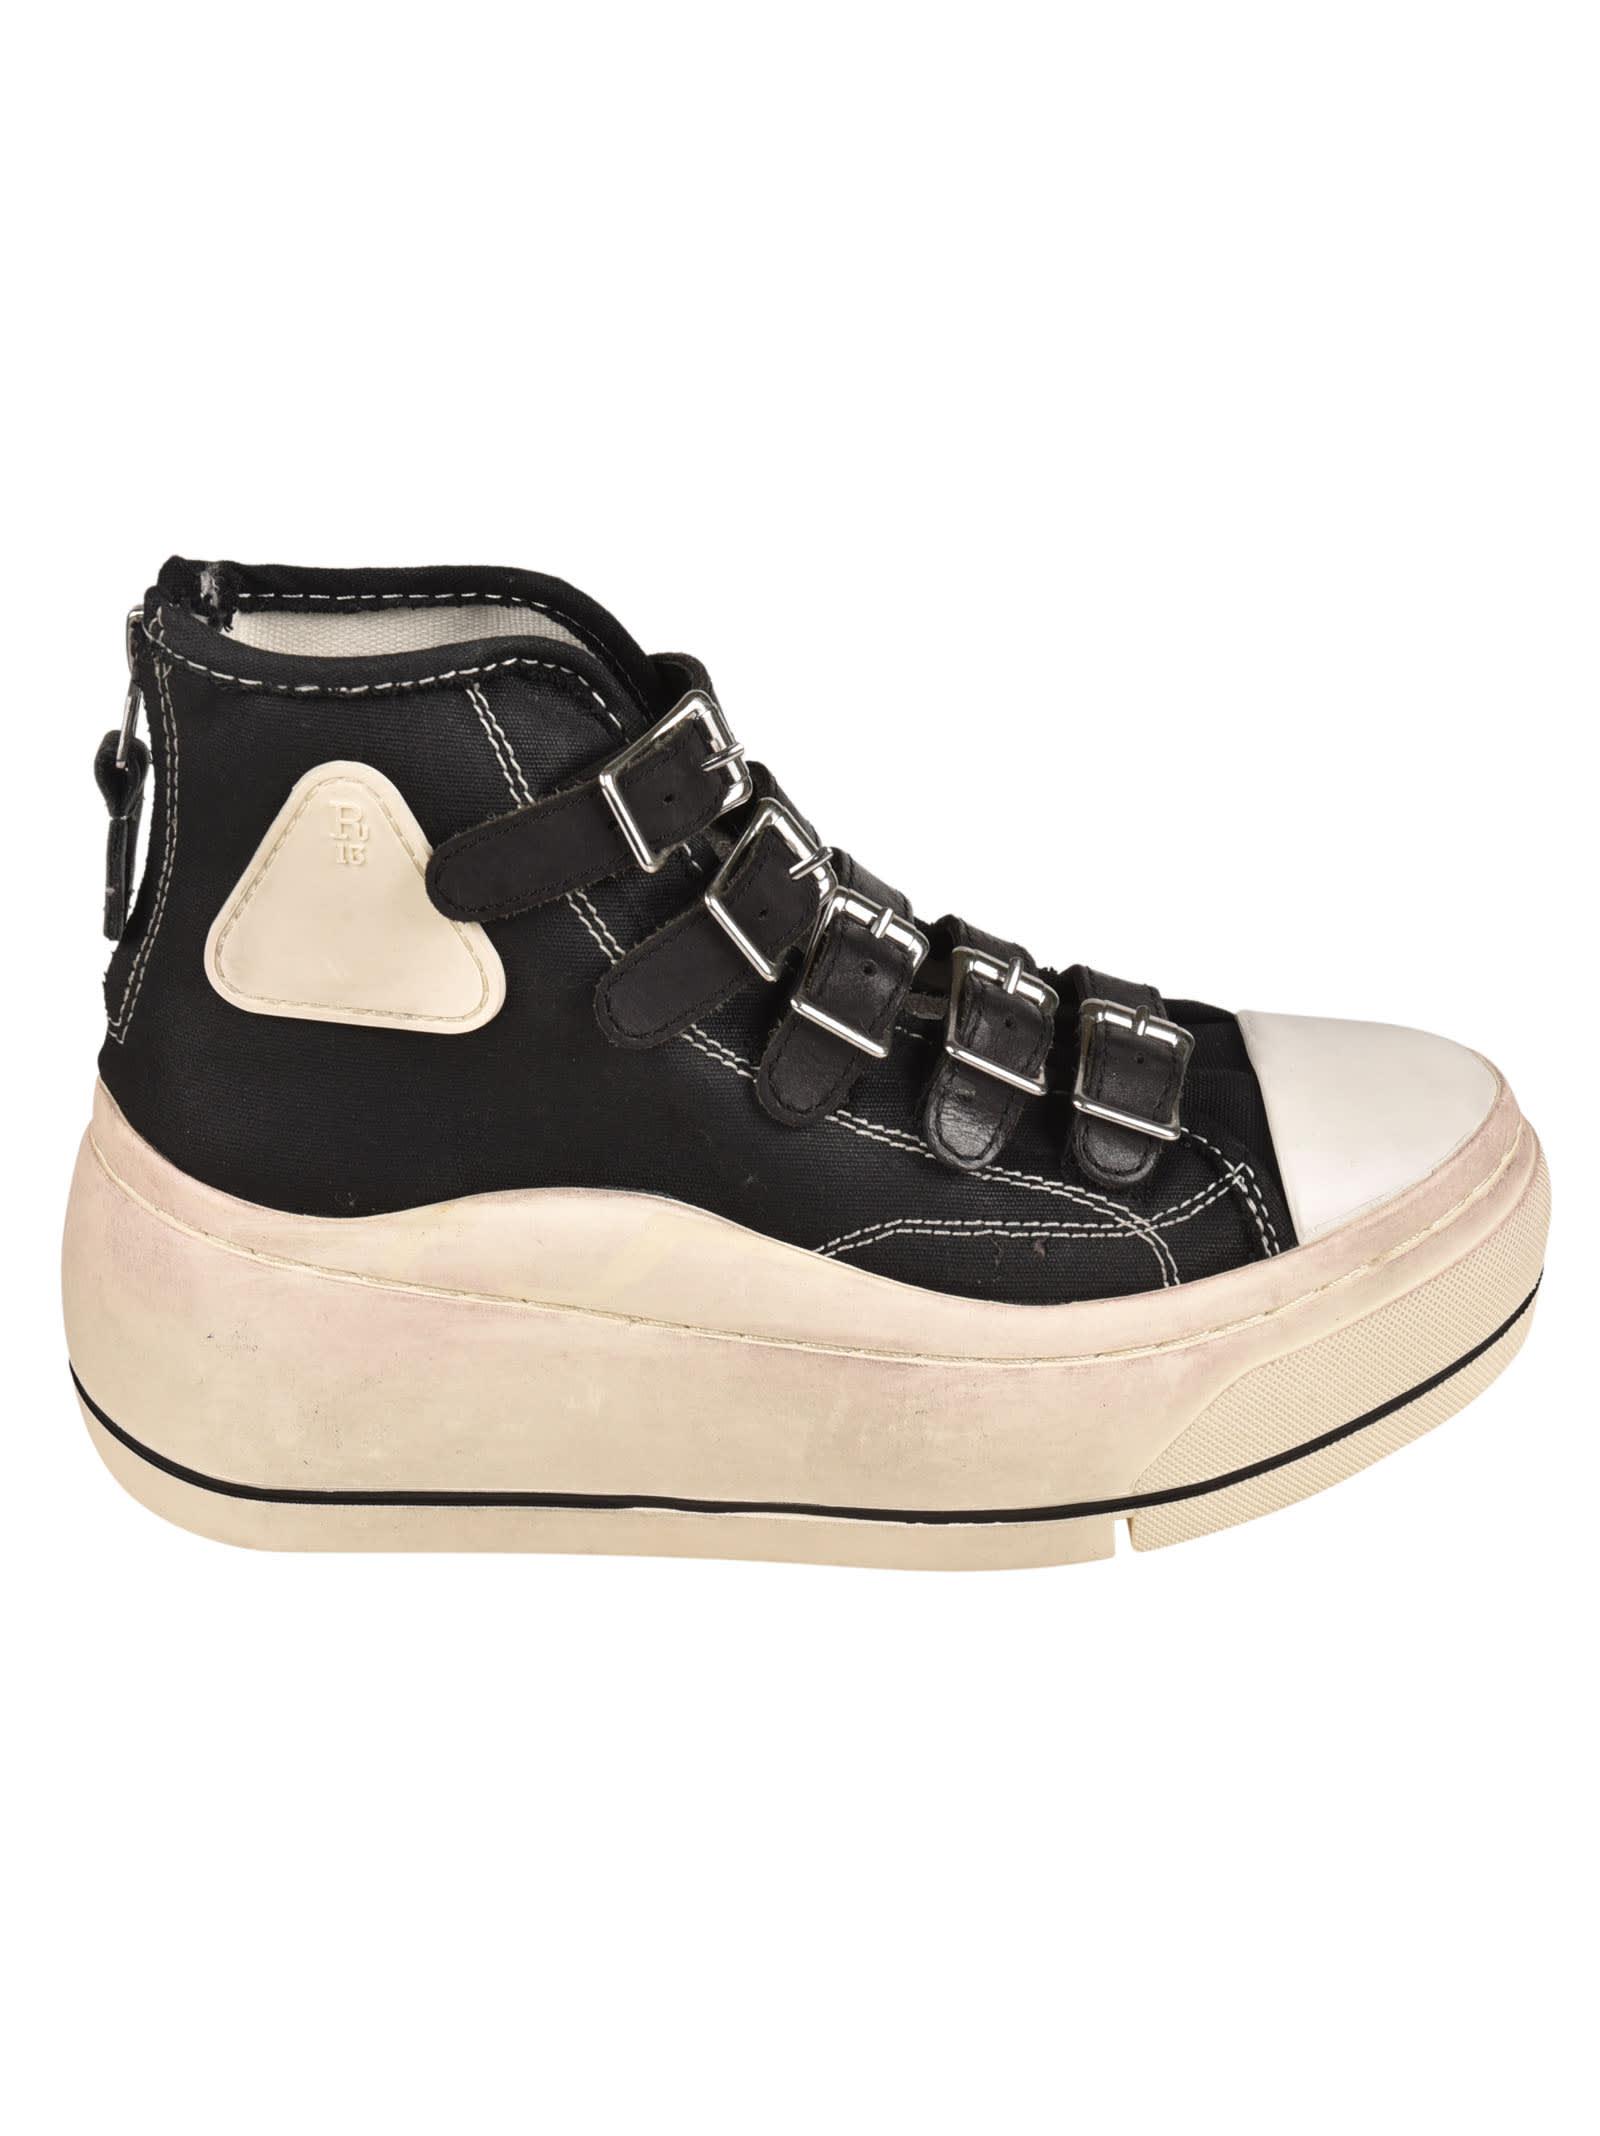 R13 Buckle Lace Free Kurt High Top Sneakers in Black | Lyst